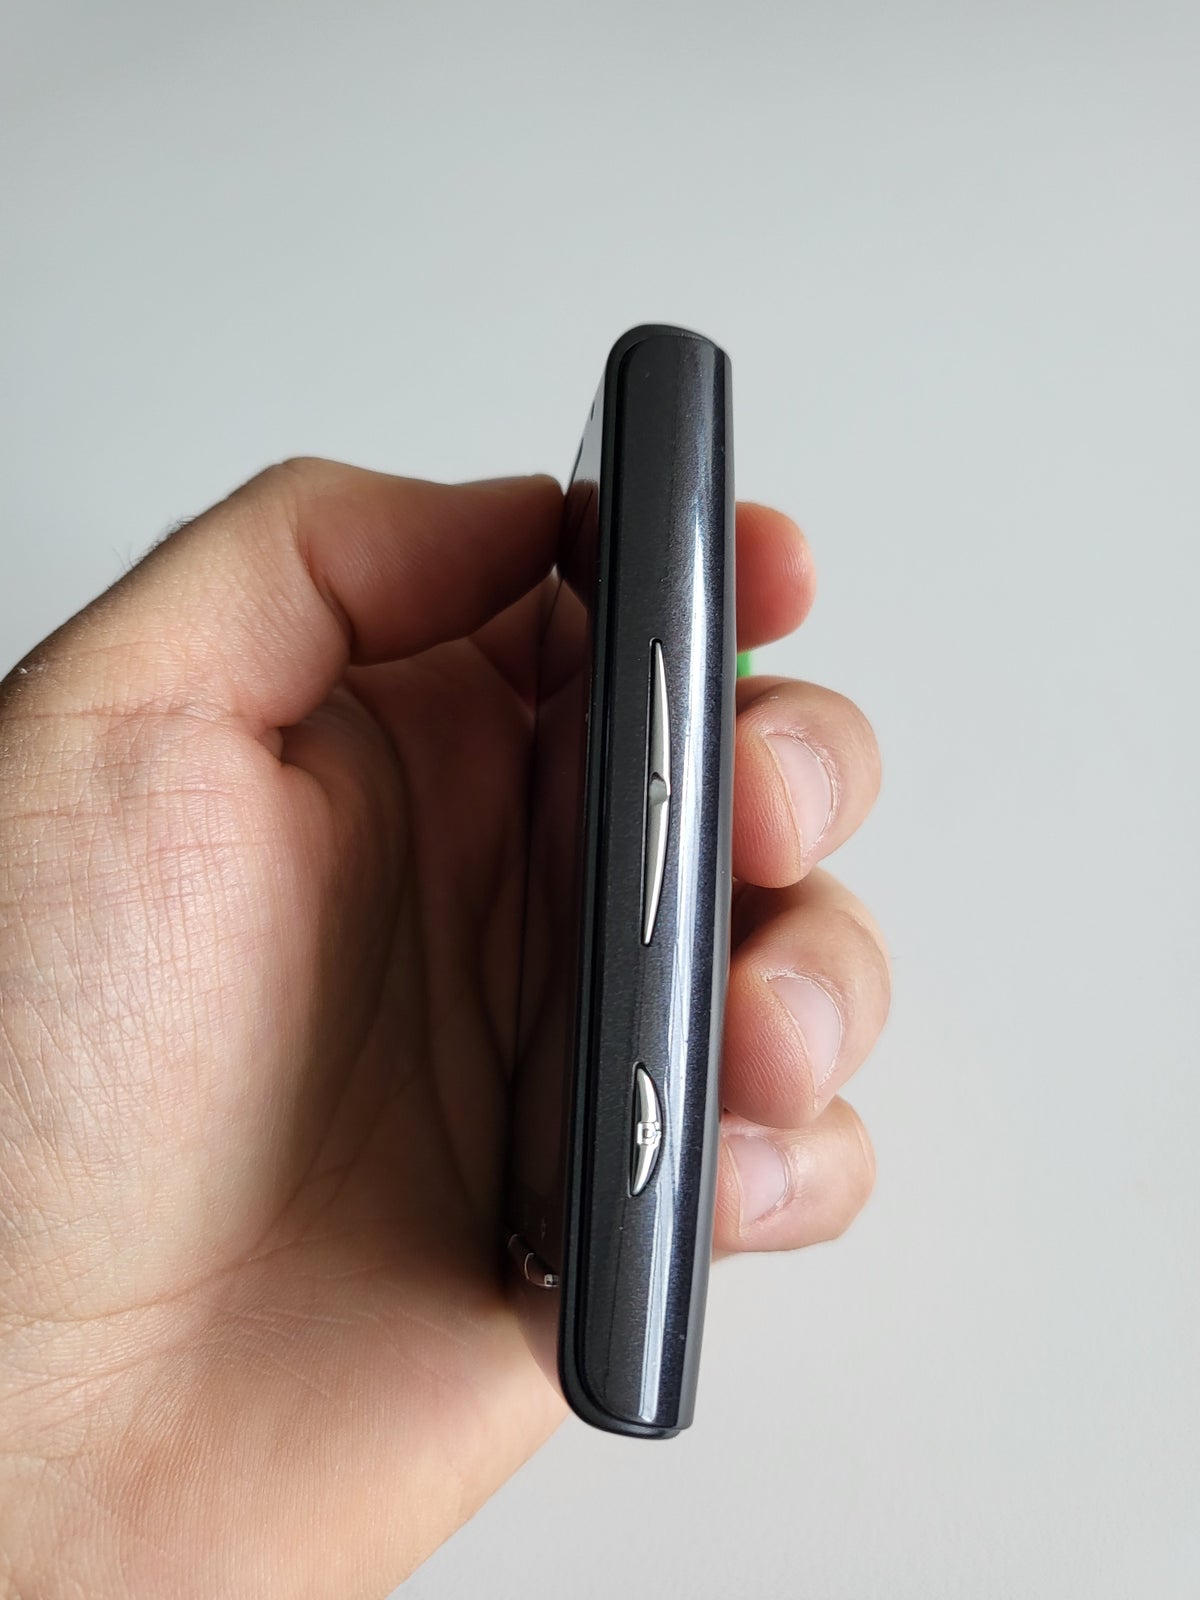 Sony Ericsson Xperia X8 E15i, 168MB , Perfekt